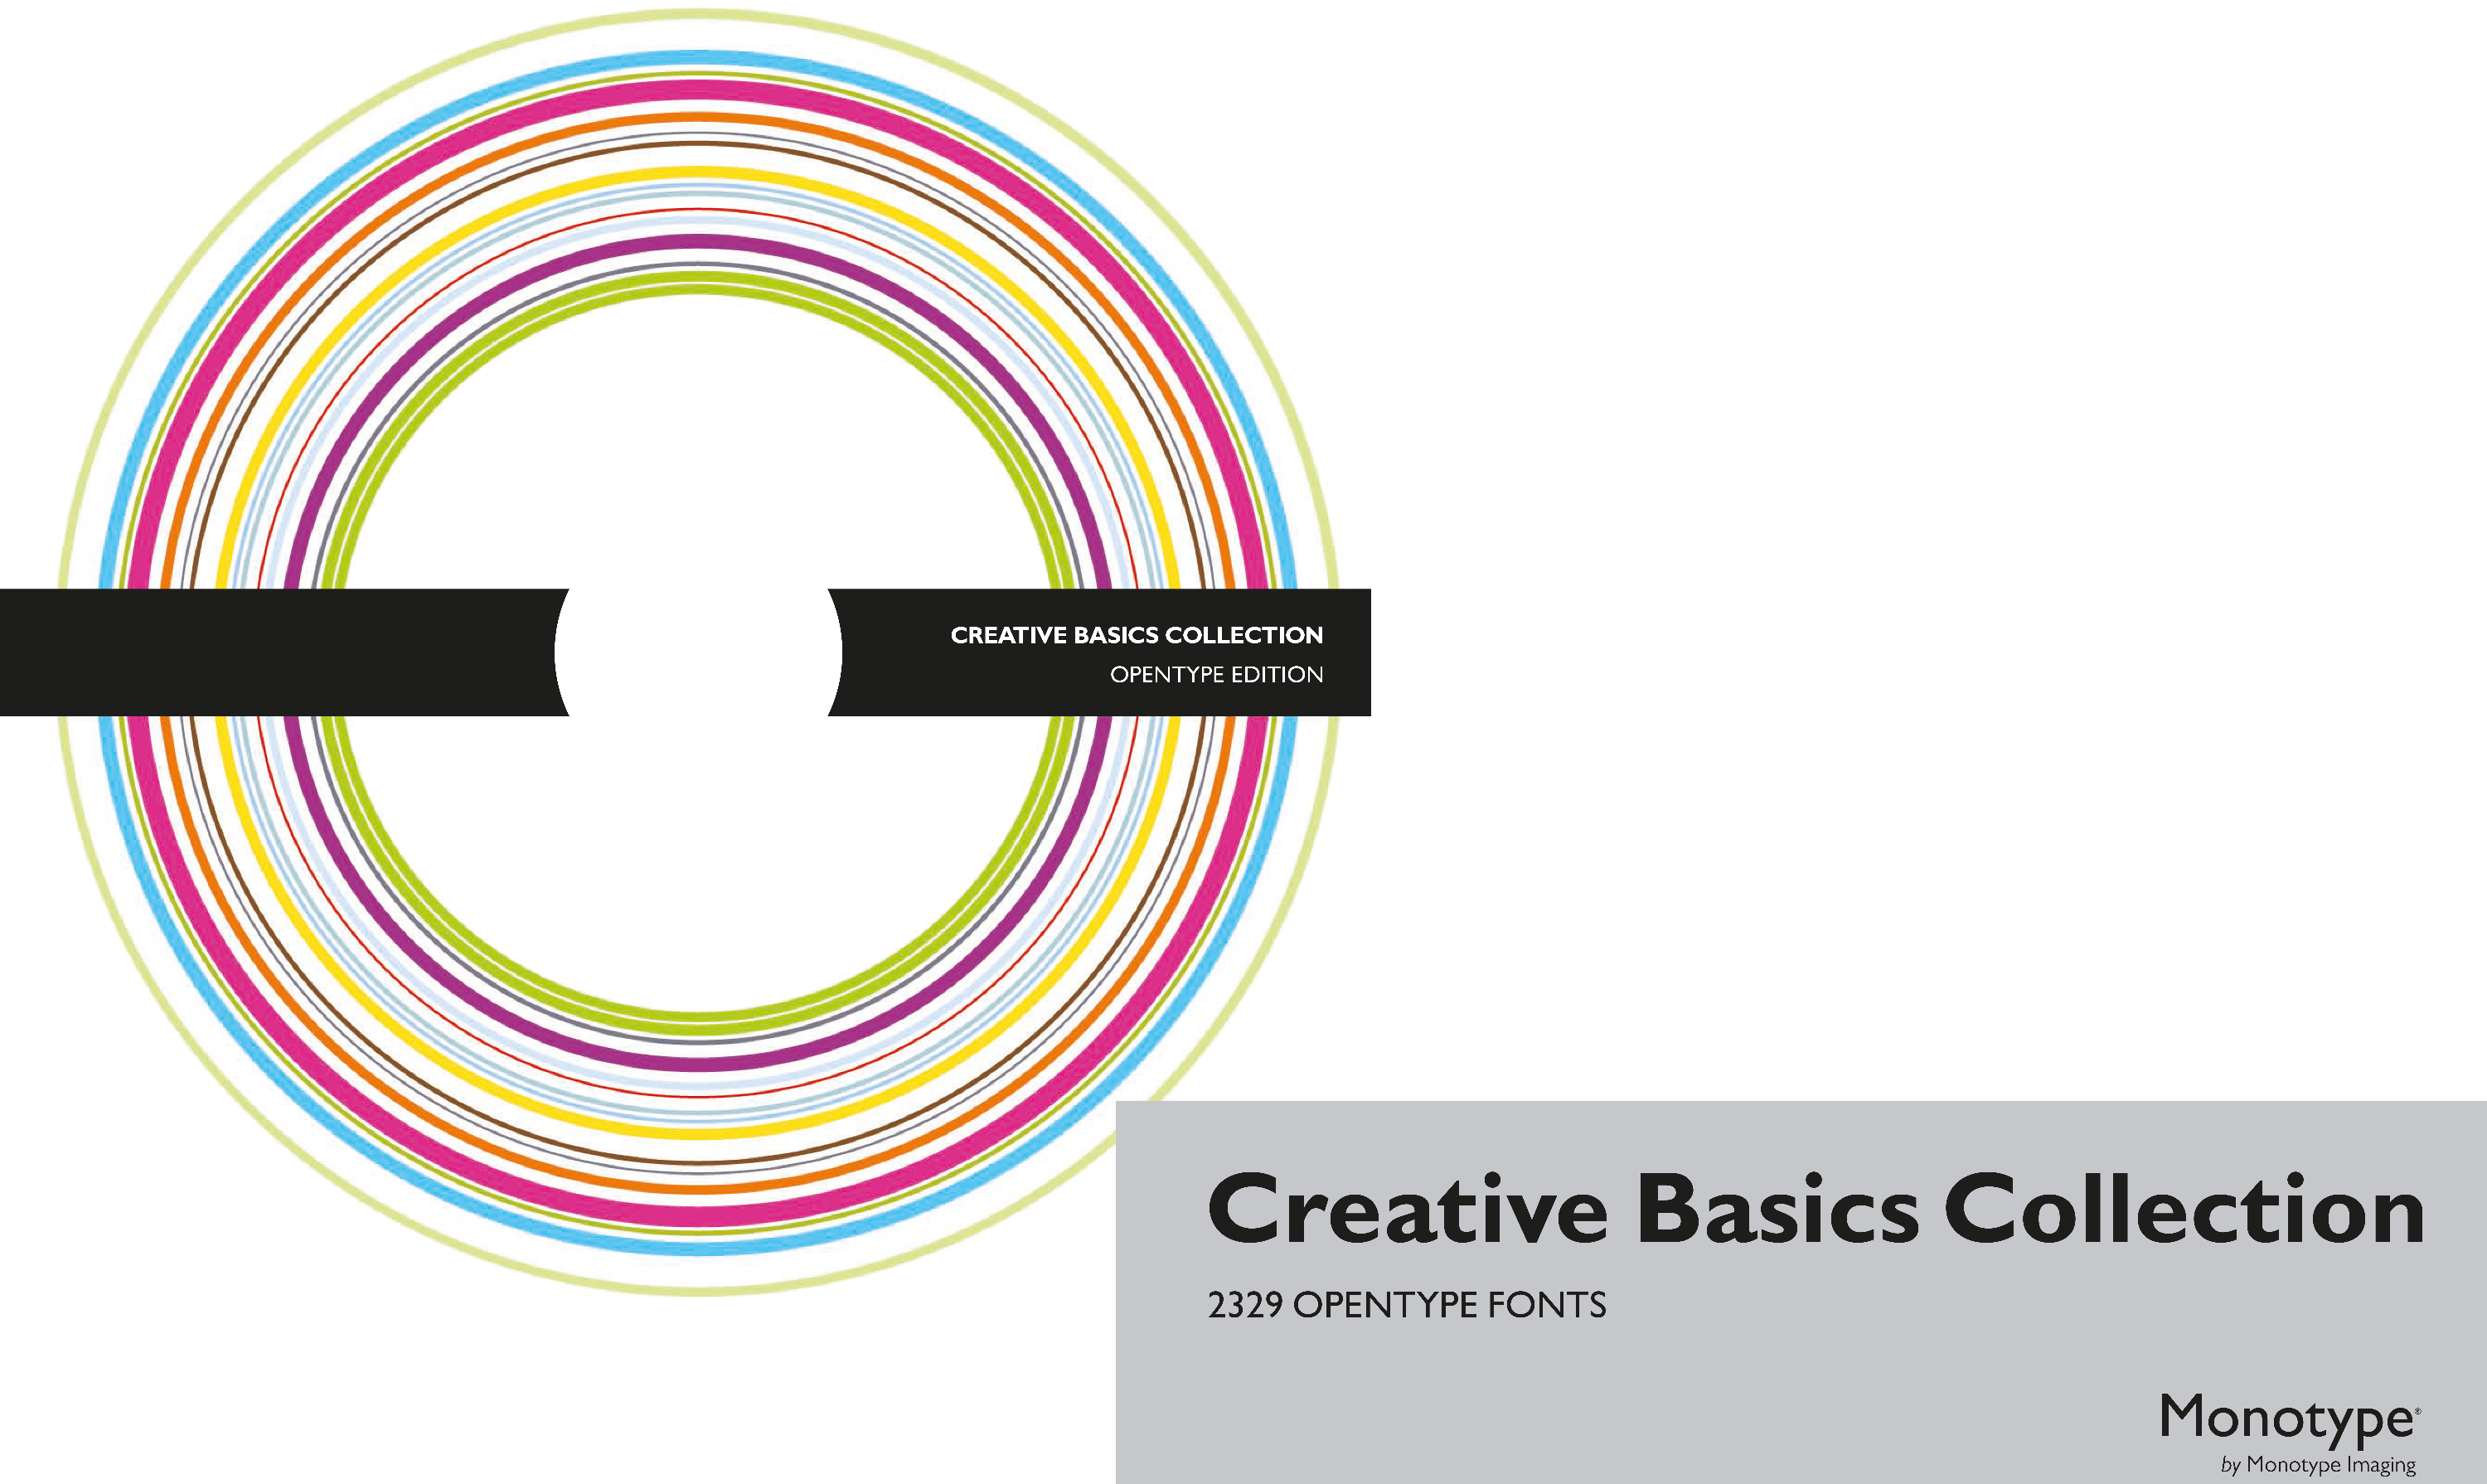 Neu: Creative Basics Collection von Linotype